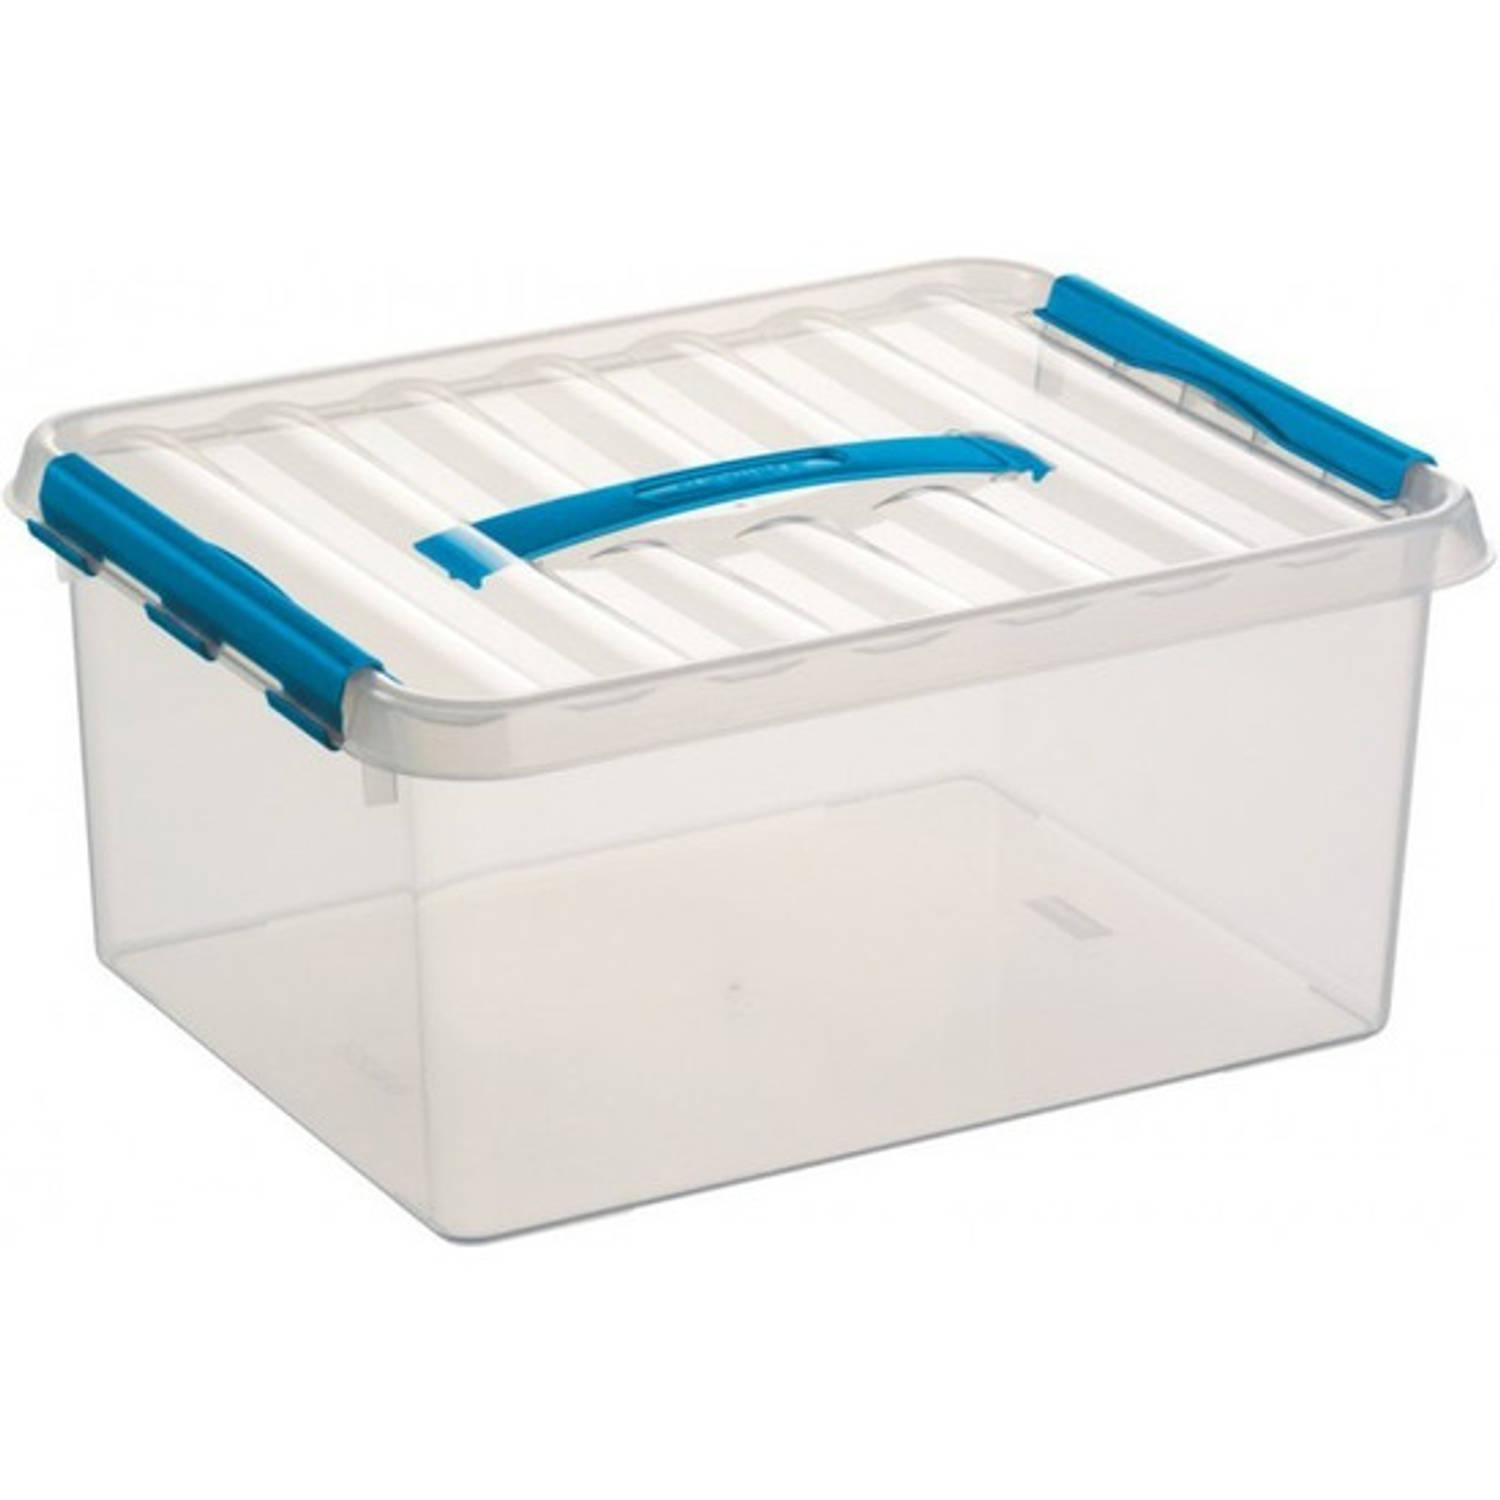 4x Opberg box-opbergdoos 15 liter 40 cm transparant-blauw A4 formaat opslagbox Opbergbak kunststof